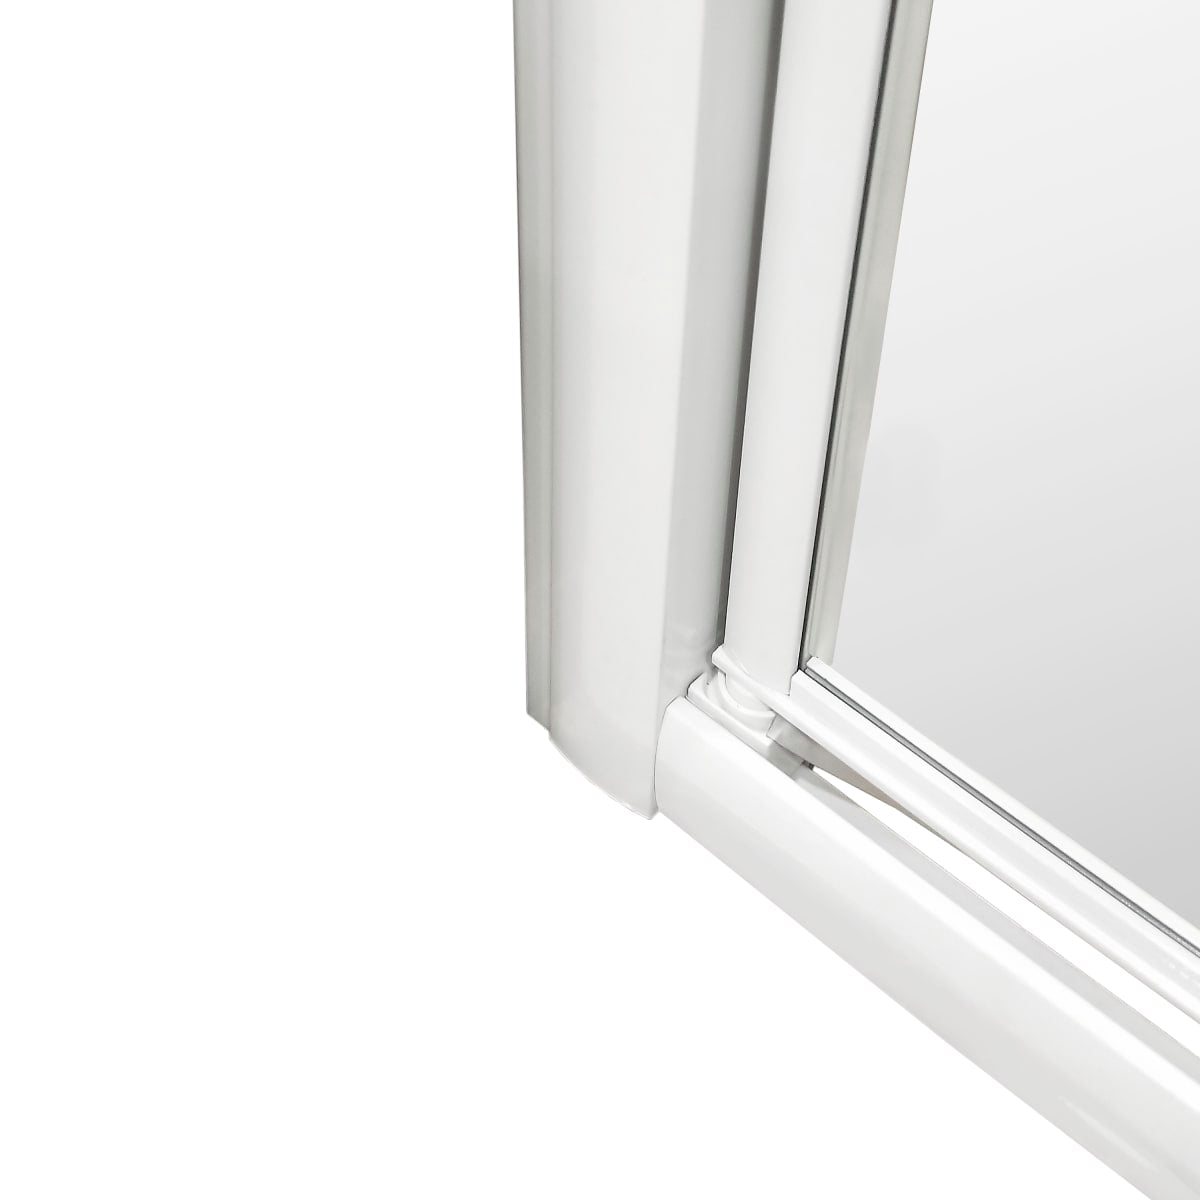 ESSENTIAL SENSEA HINGED DOOR W 70 H 185 CM SCREEN-PRINTED GLASS 4 MM WHITE